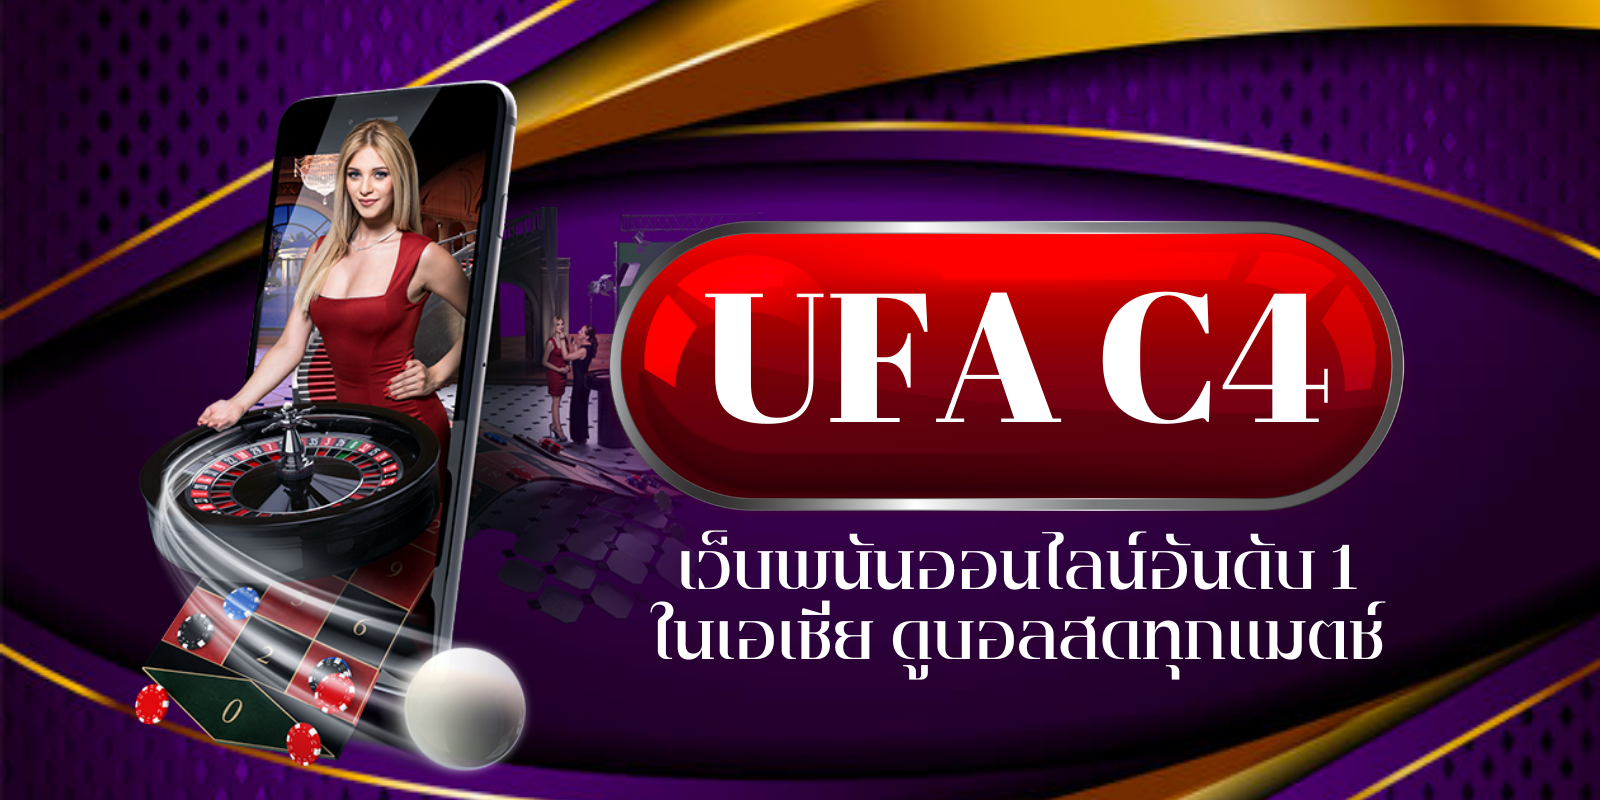 ufa c4 เว็บพนันออนไลน์อันดับ1ในเอเชีย ดูบอลสดทุกแมตช์